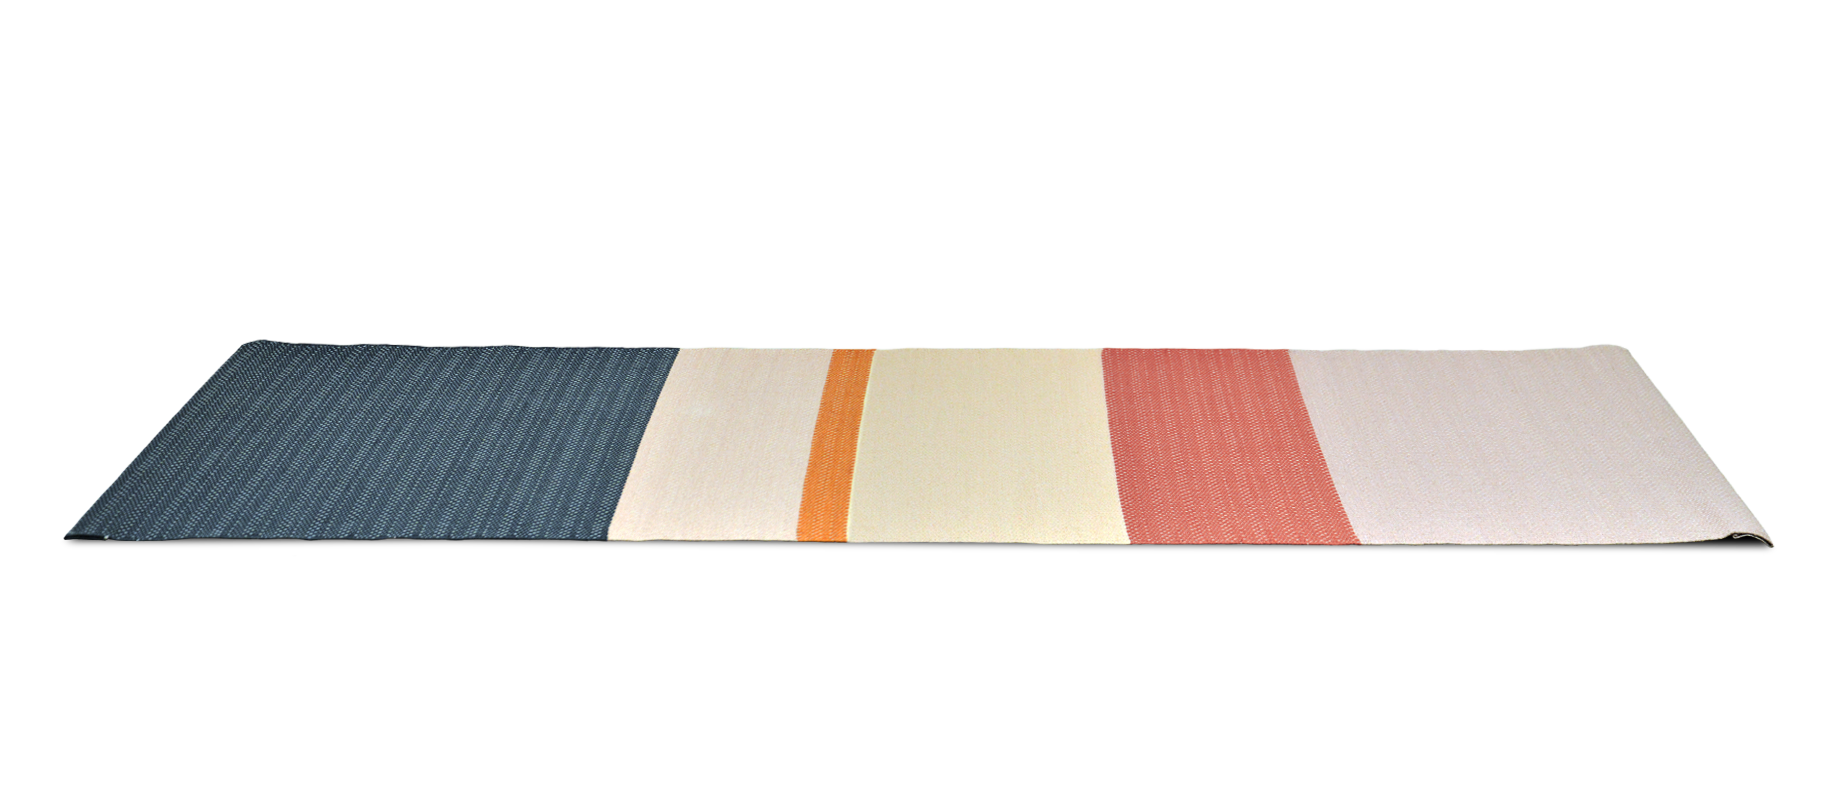 Carpet Png Red Carpet Modern Carpet Texture Clipart Download Free Transparent Png Logos